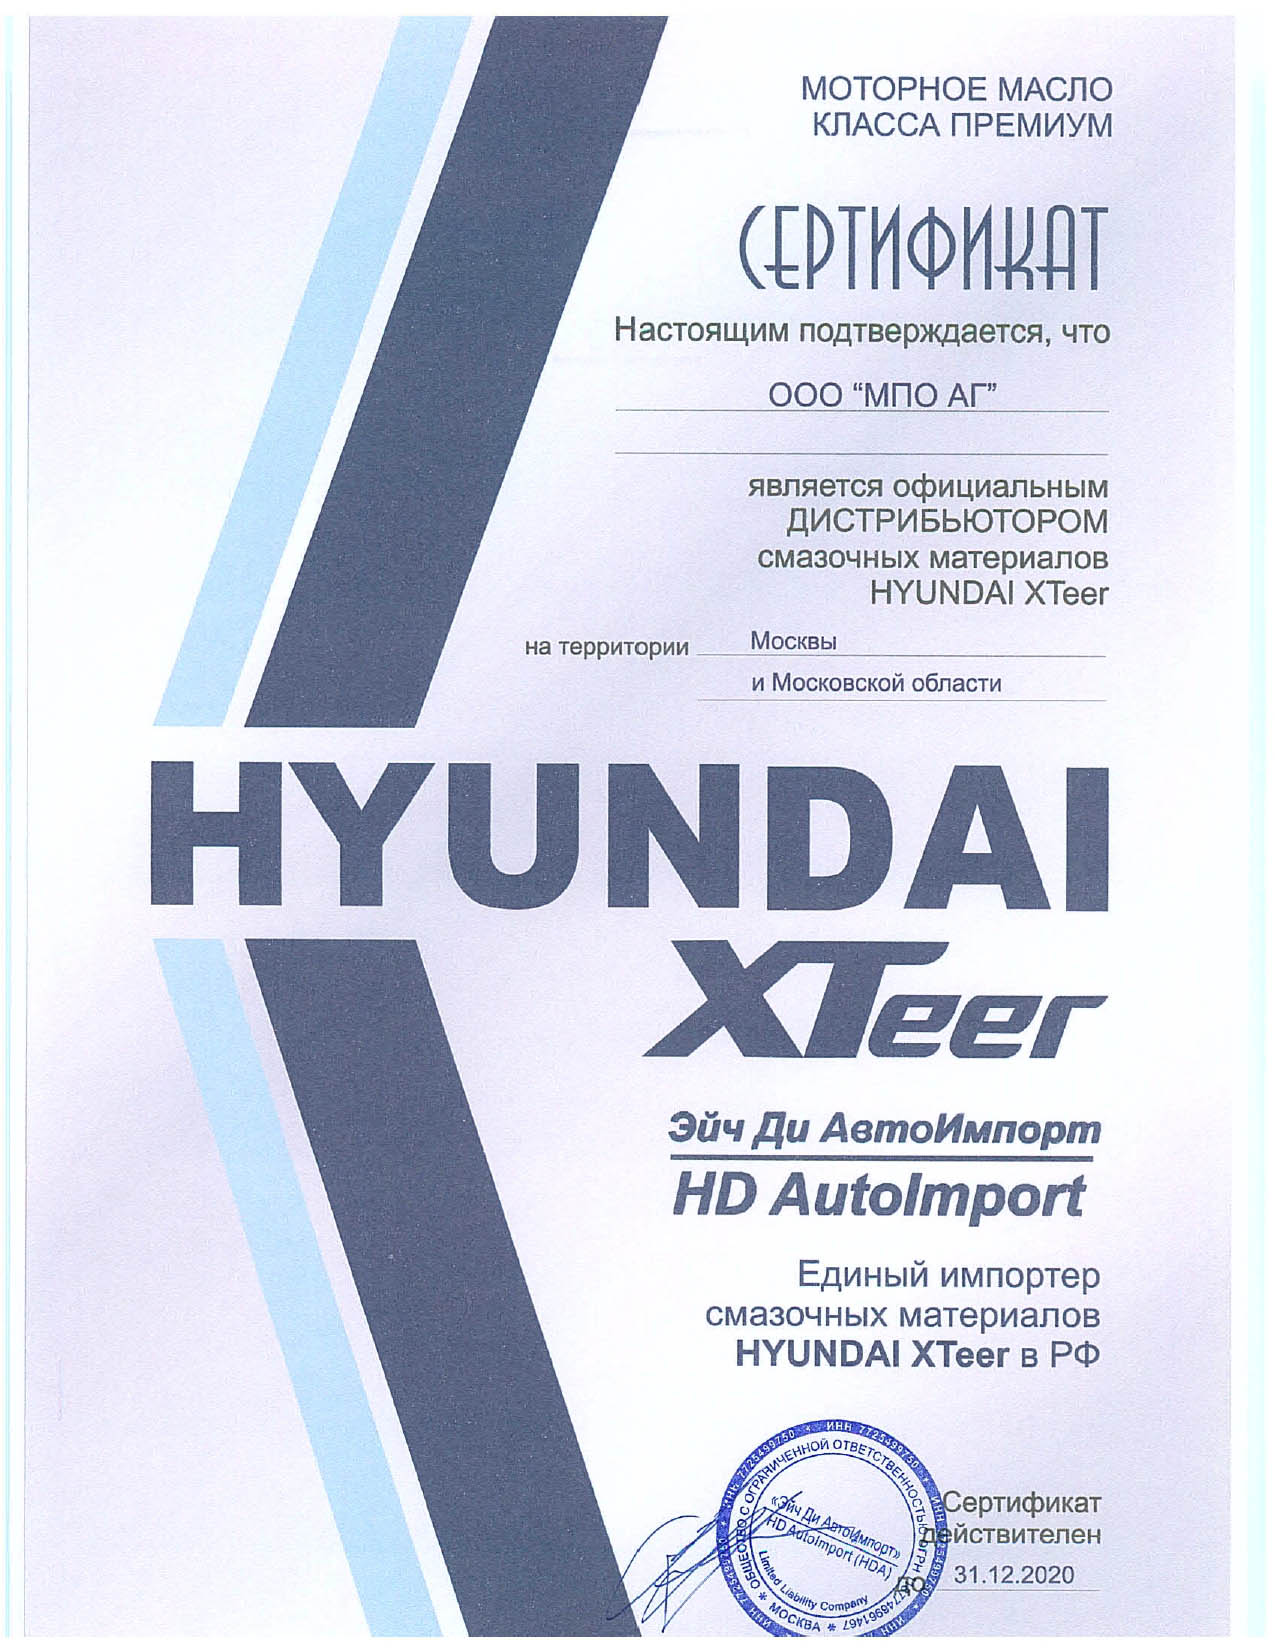 Сертификат Hyundai Xteer